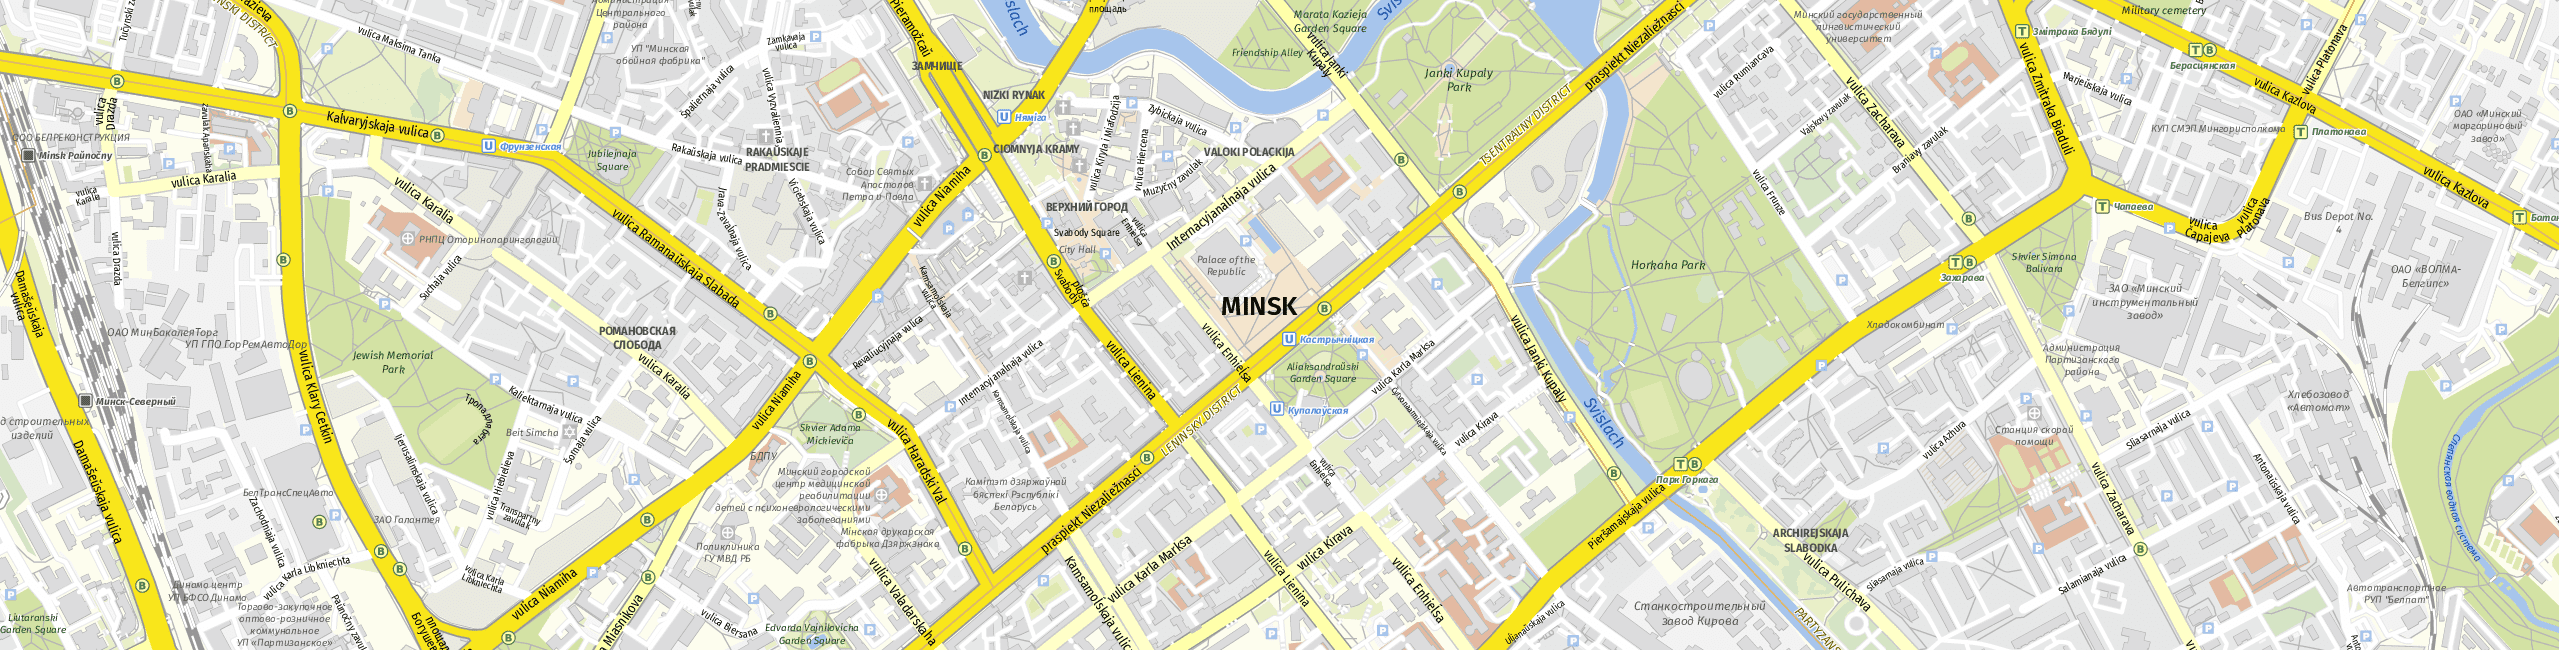 Stadtplan Minsk zum Downloaden.